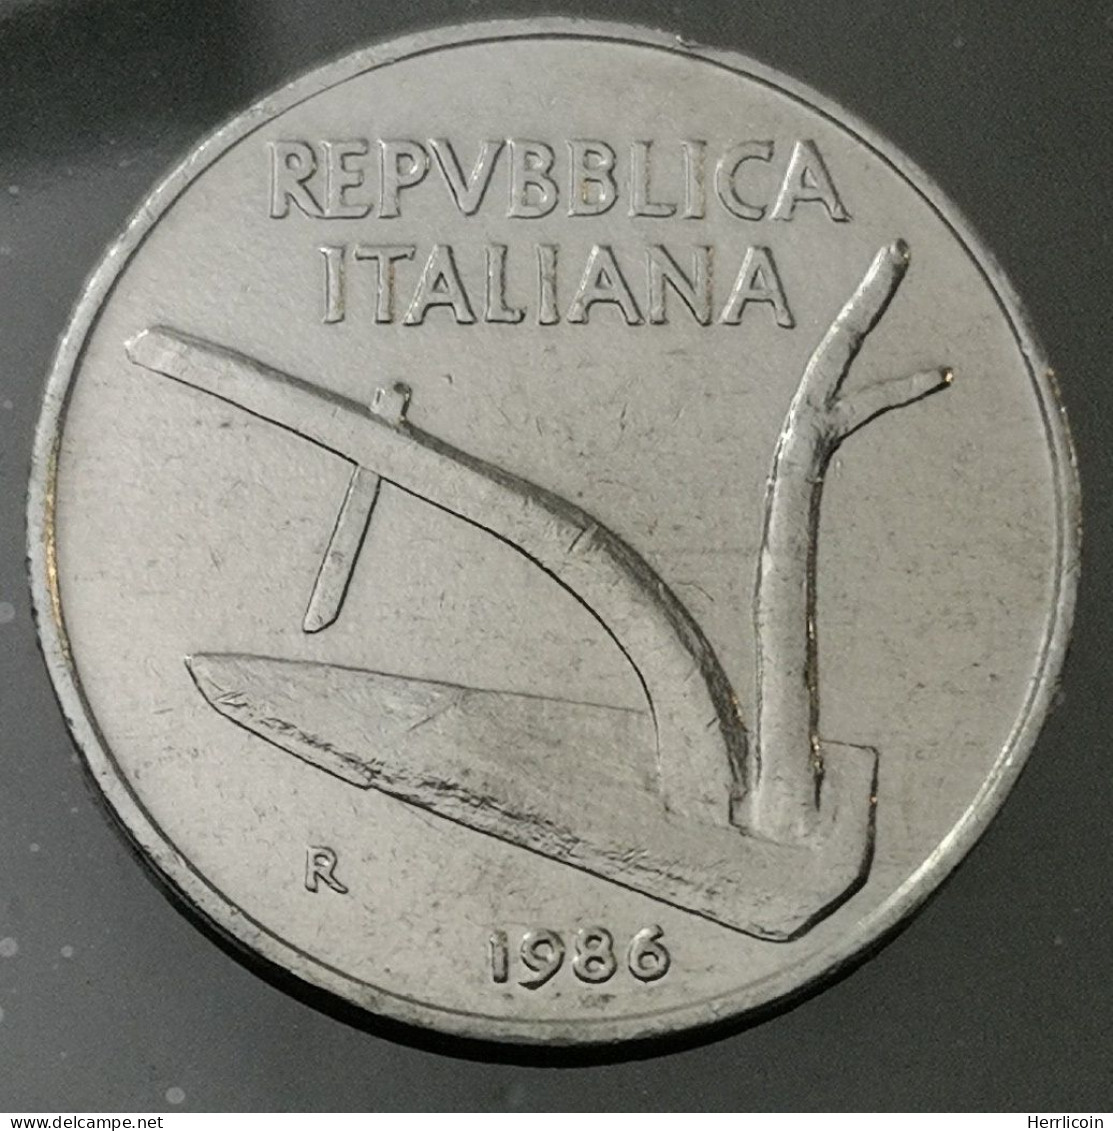 Monnaie Italie - 1986 R  - 10 Lire - 10 Liras